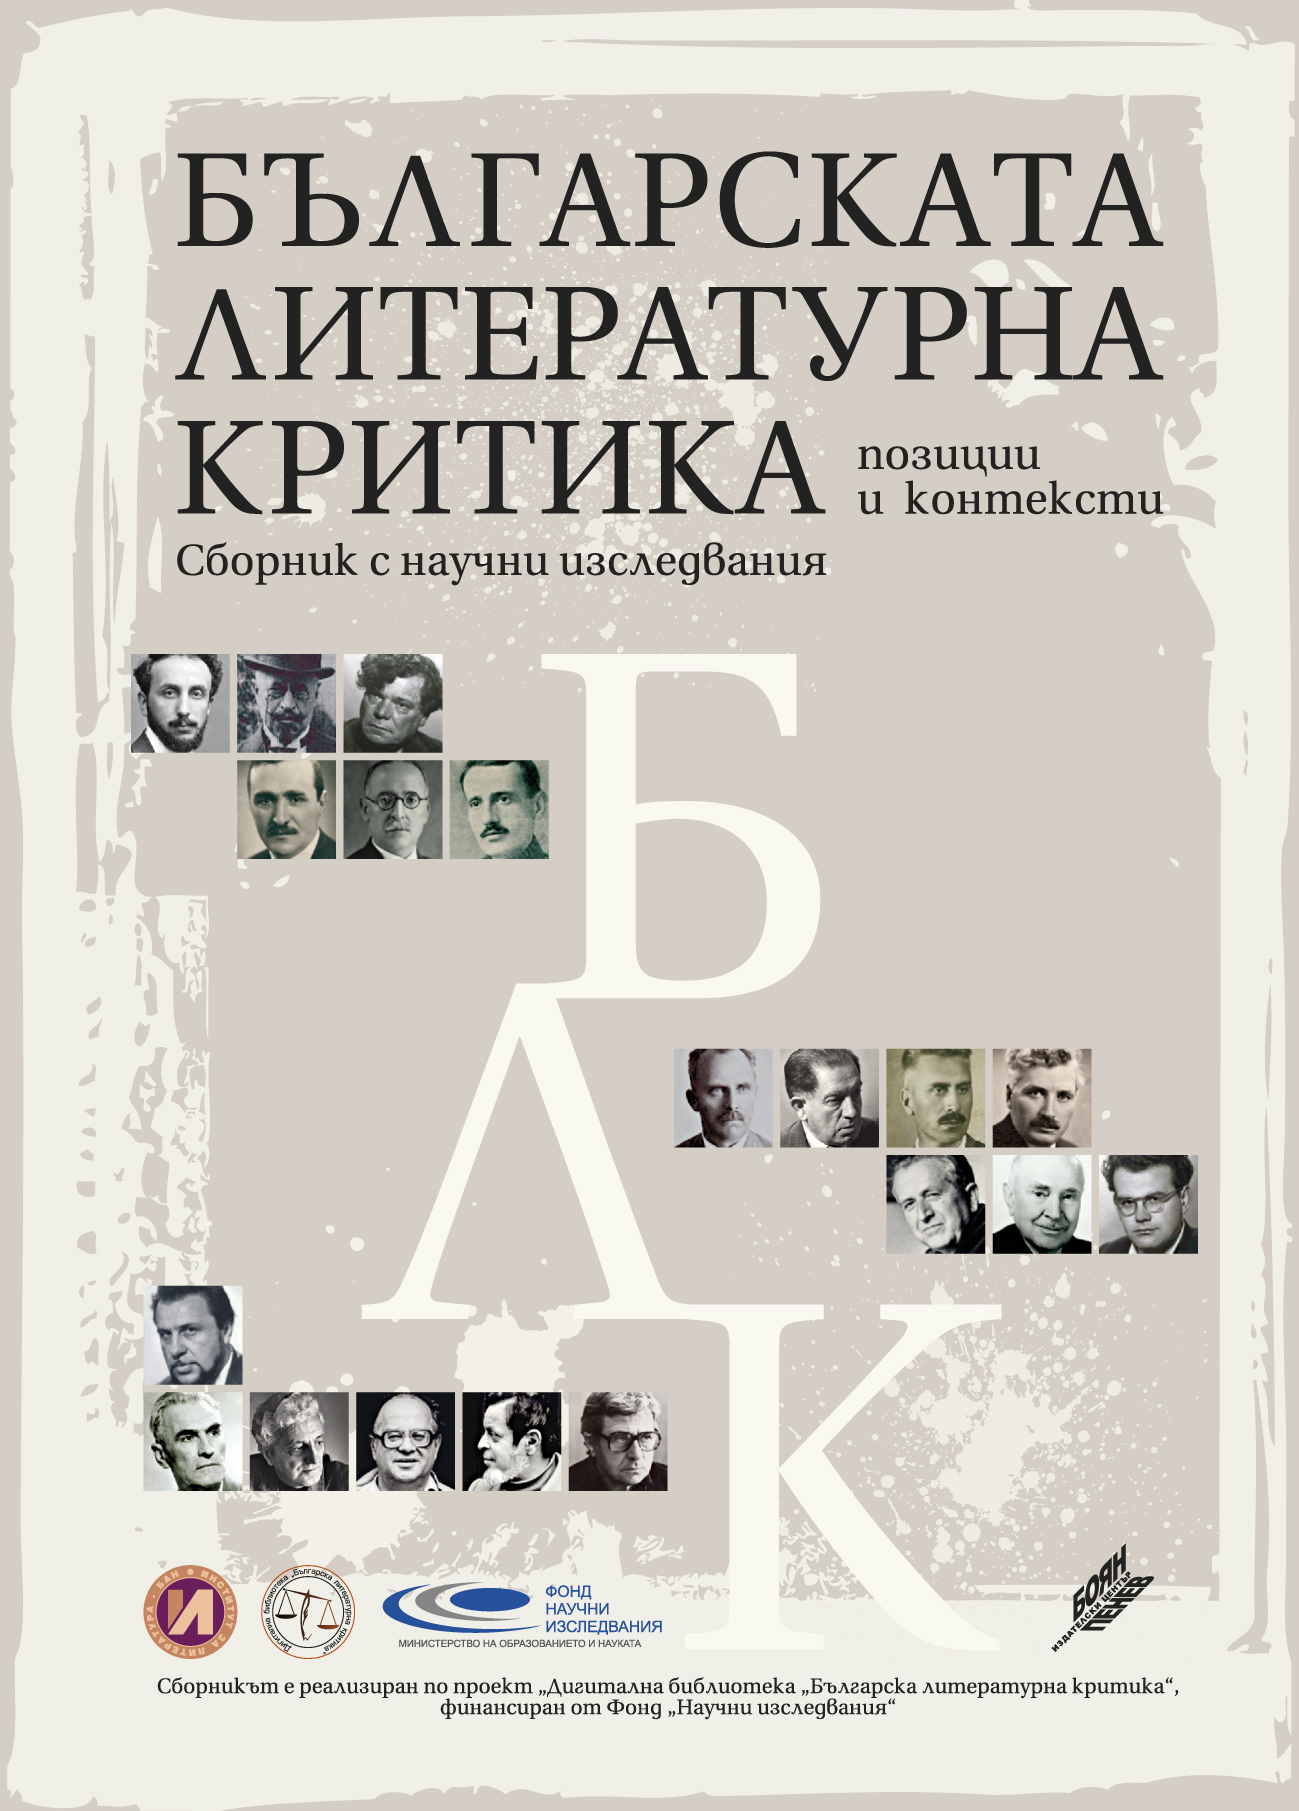 Българската литературна критика - позиции и контексти